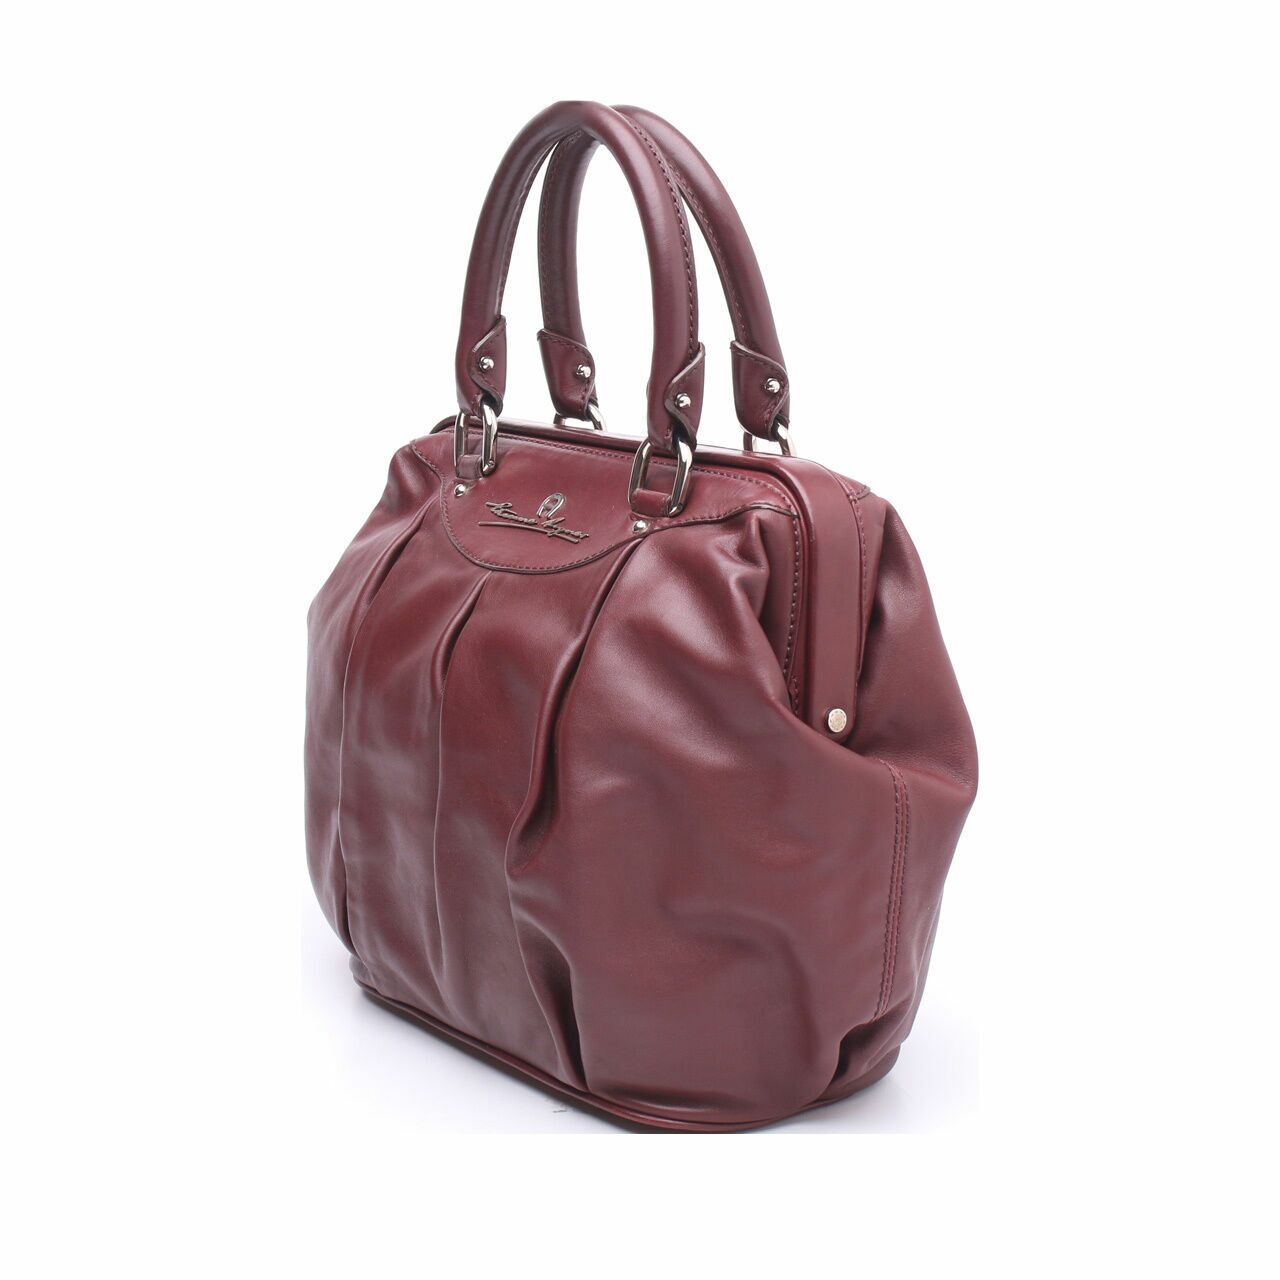 ETIENNE AIGNER Maroon Handbag